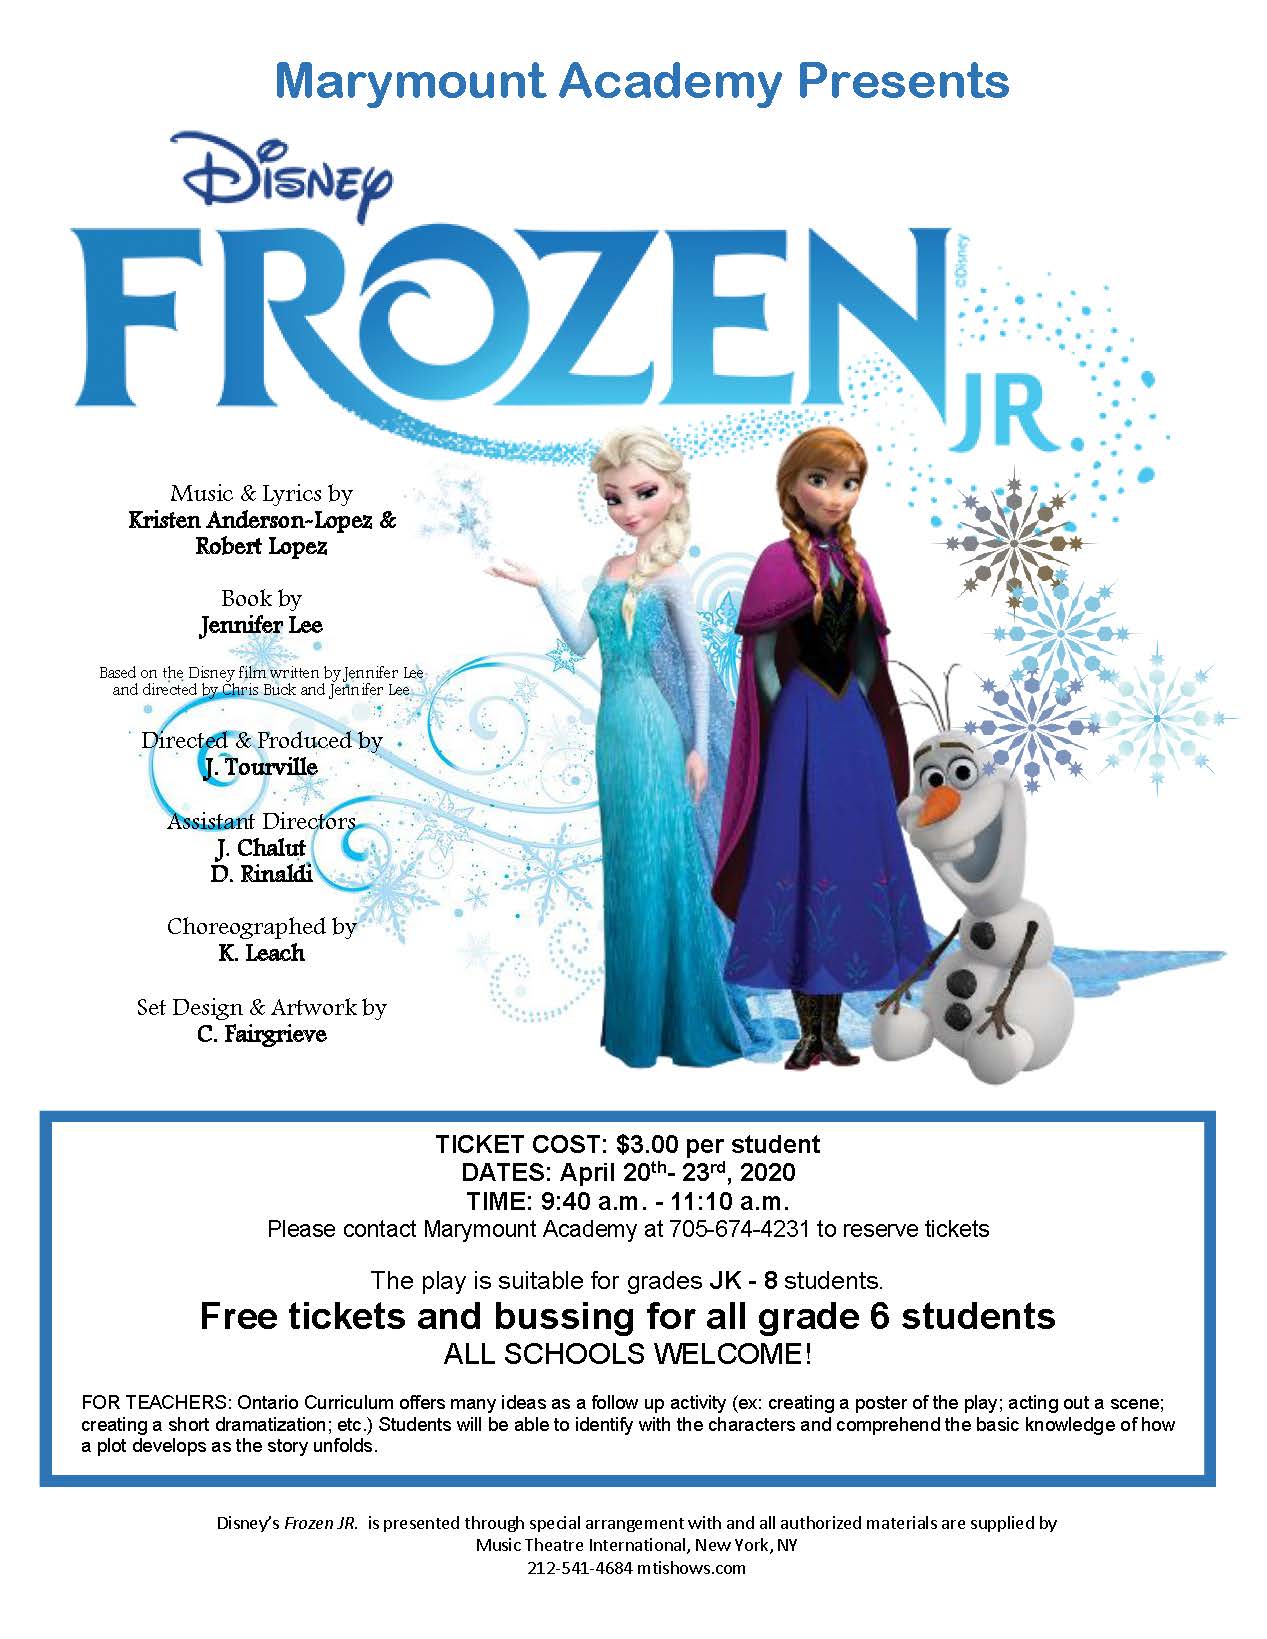 Marymount Academy Presents Frozen